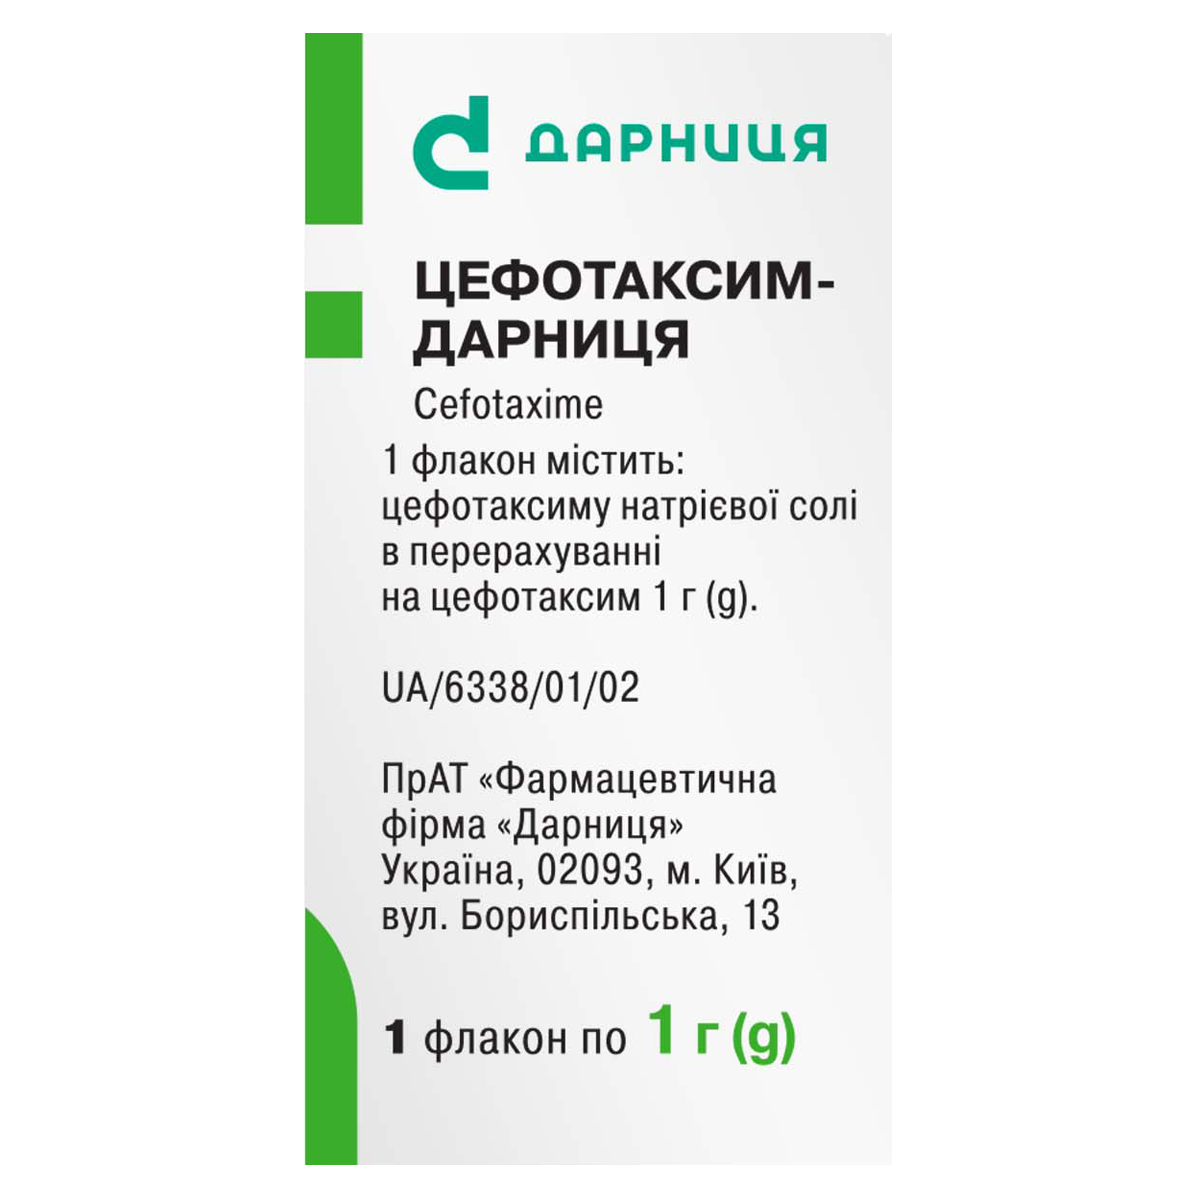 Цефотаксим-Дарница фармацевтическая компания «Дарница»